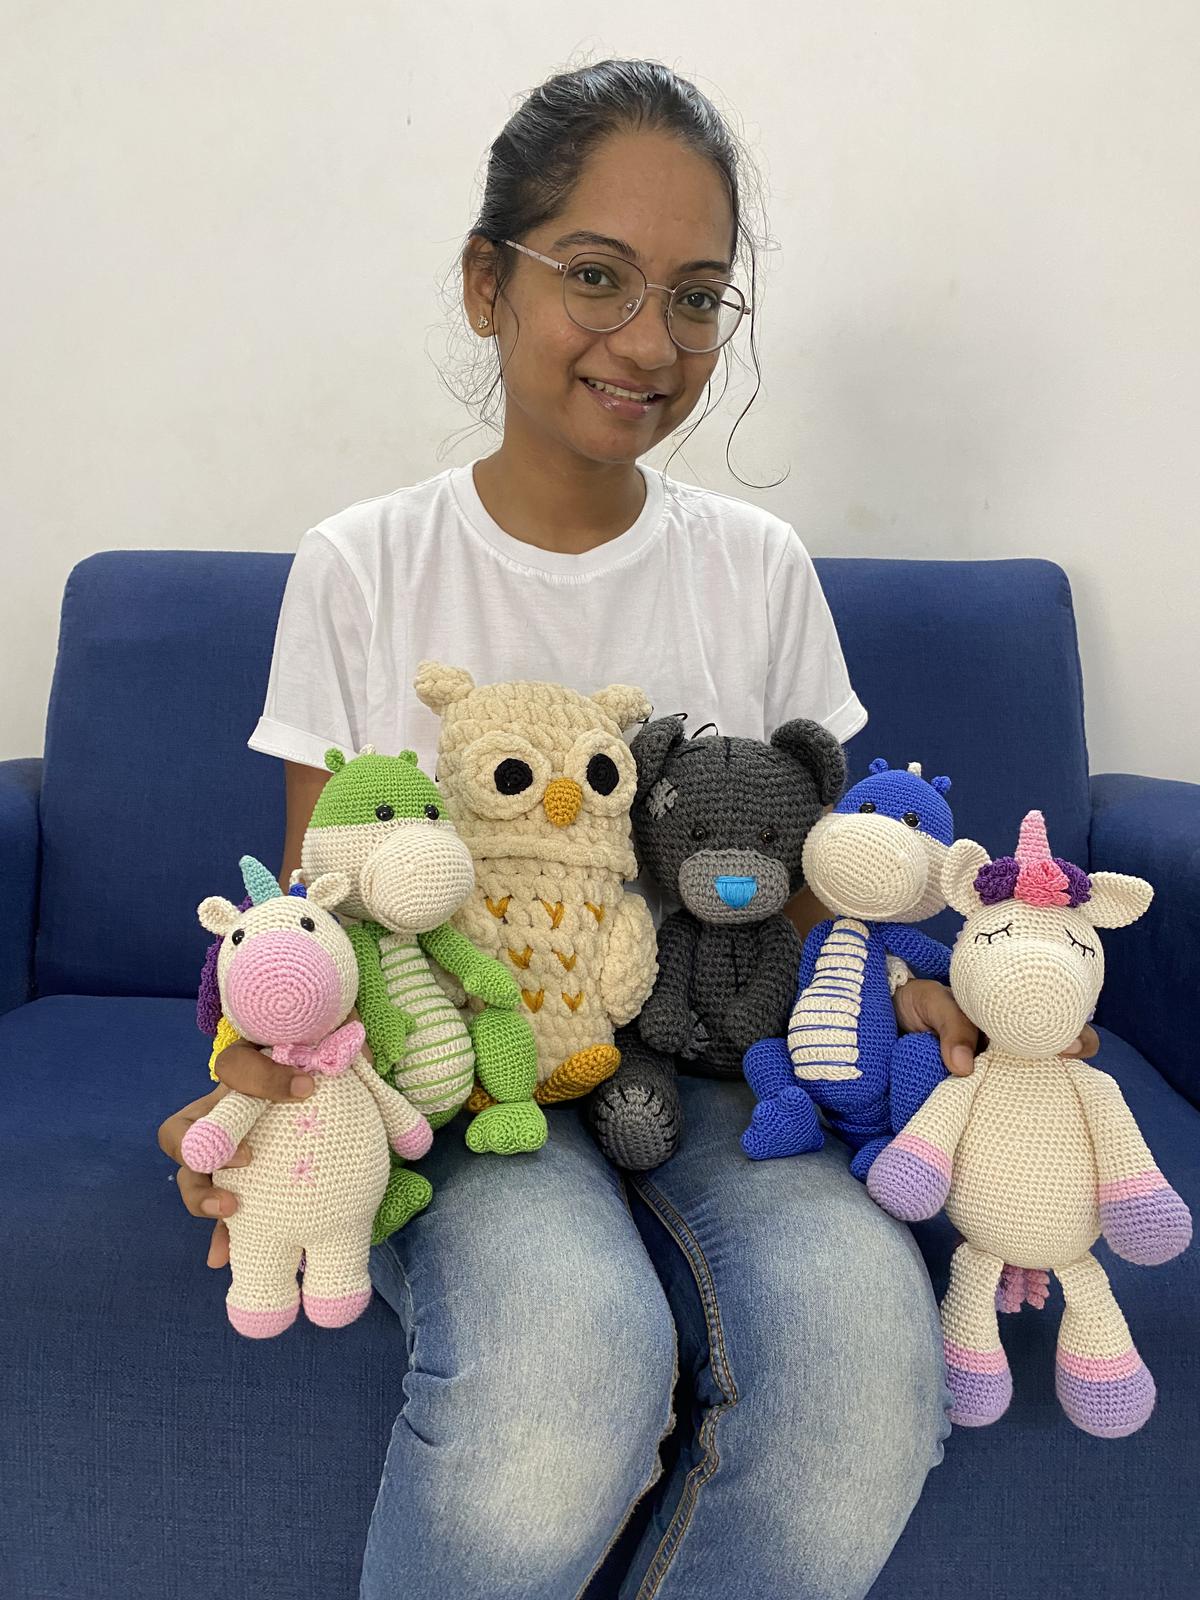 Priya Ayyappan with the Amigurumi toys crocheted by her 